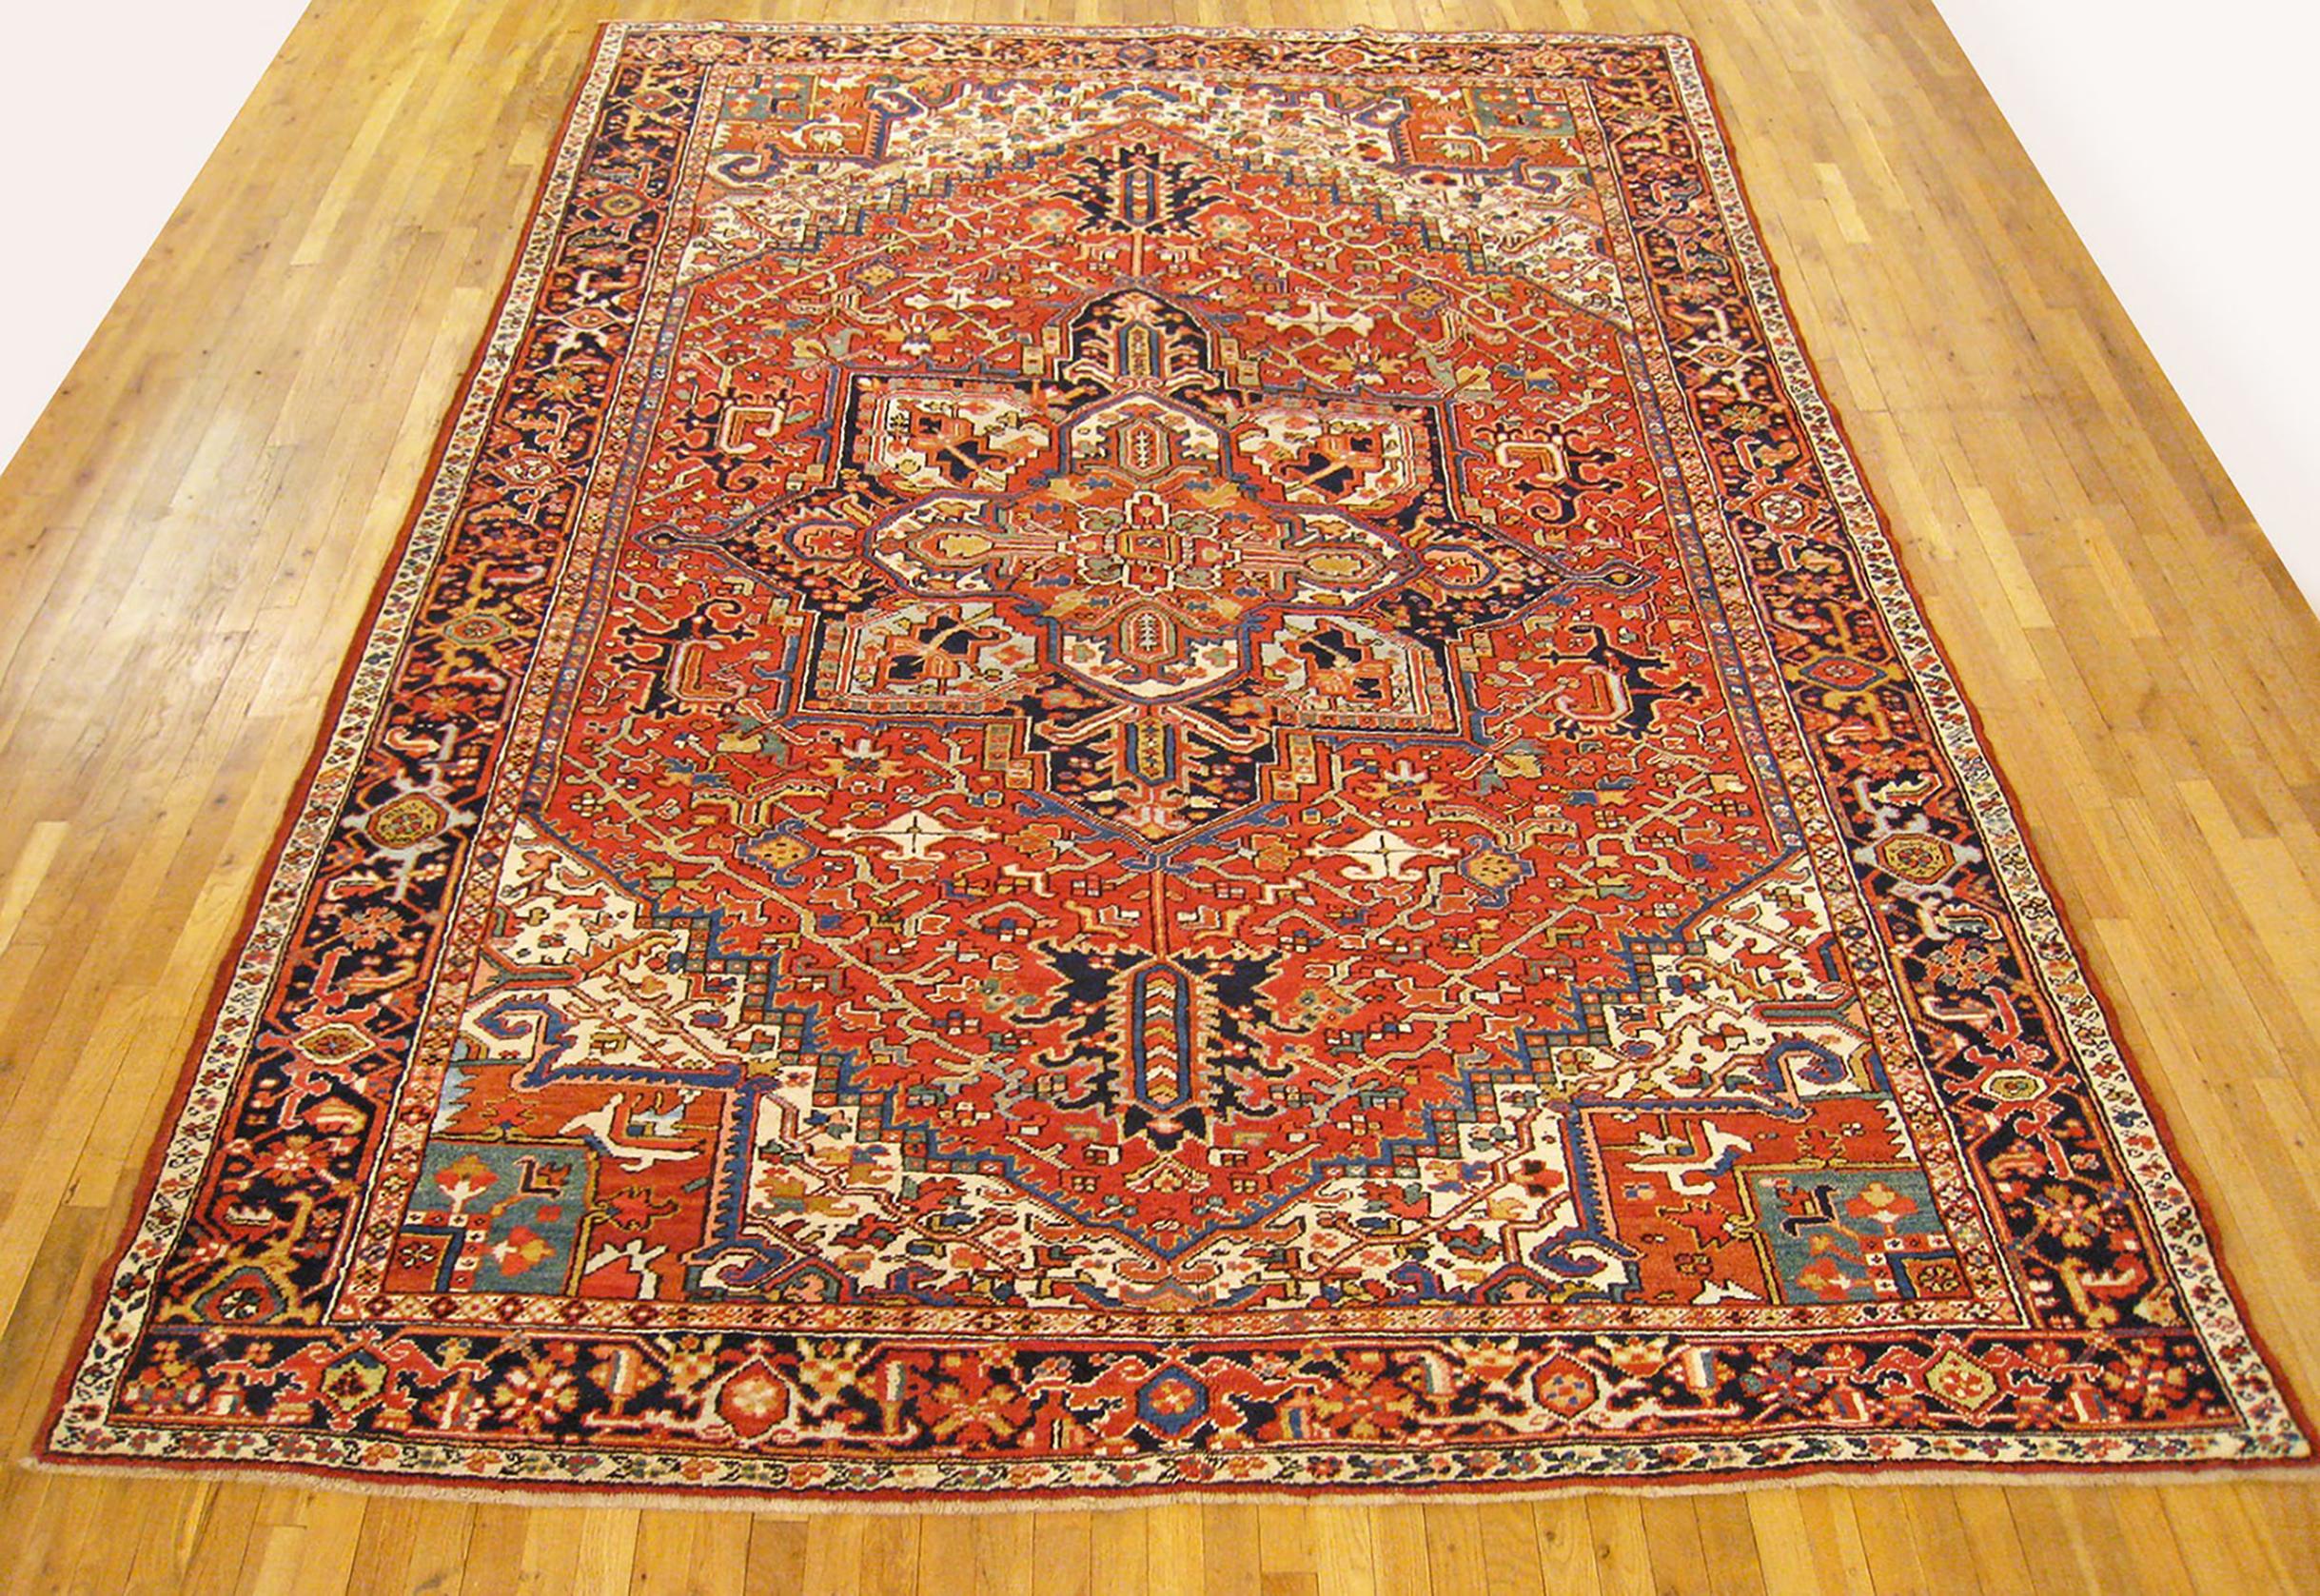 Vintage Persian Heriz Oriental Rug, Room size

A vintage Persian Heriz oriental rug, size 11'6